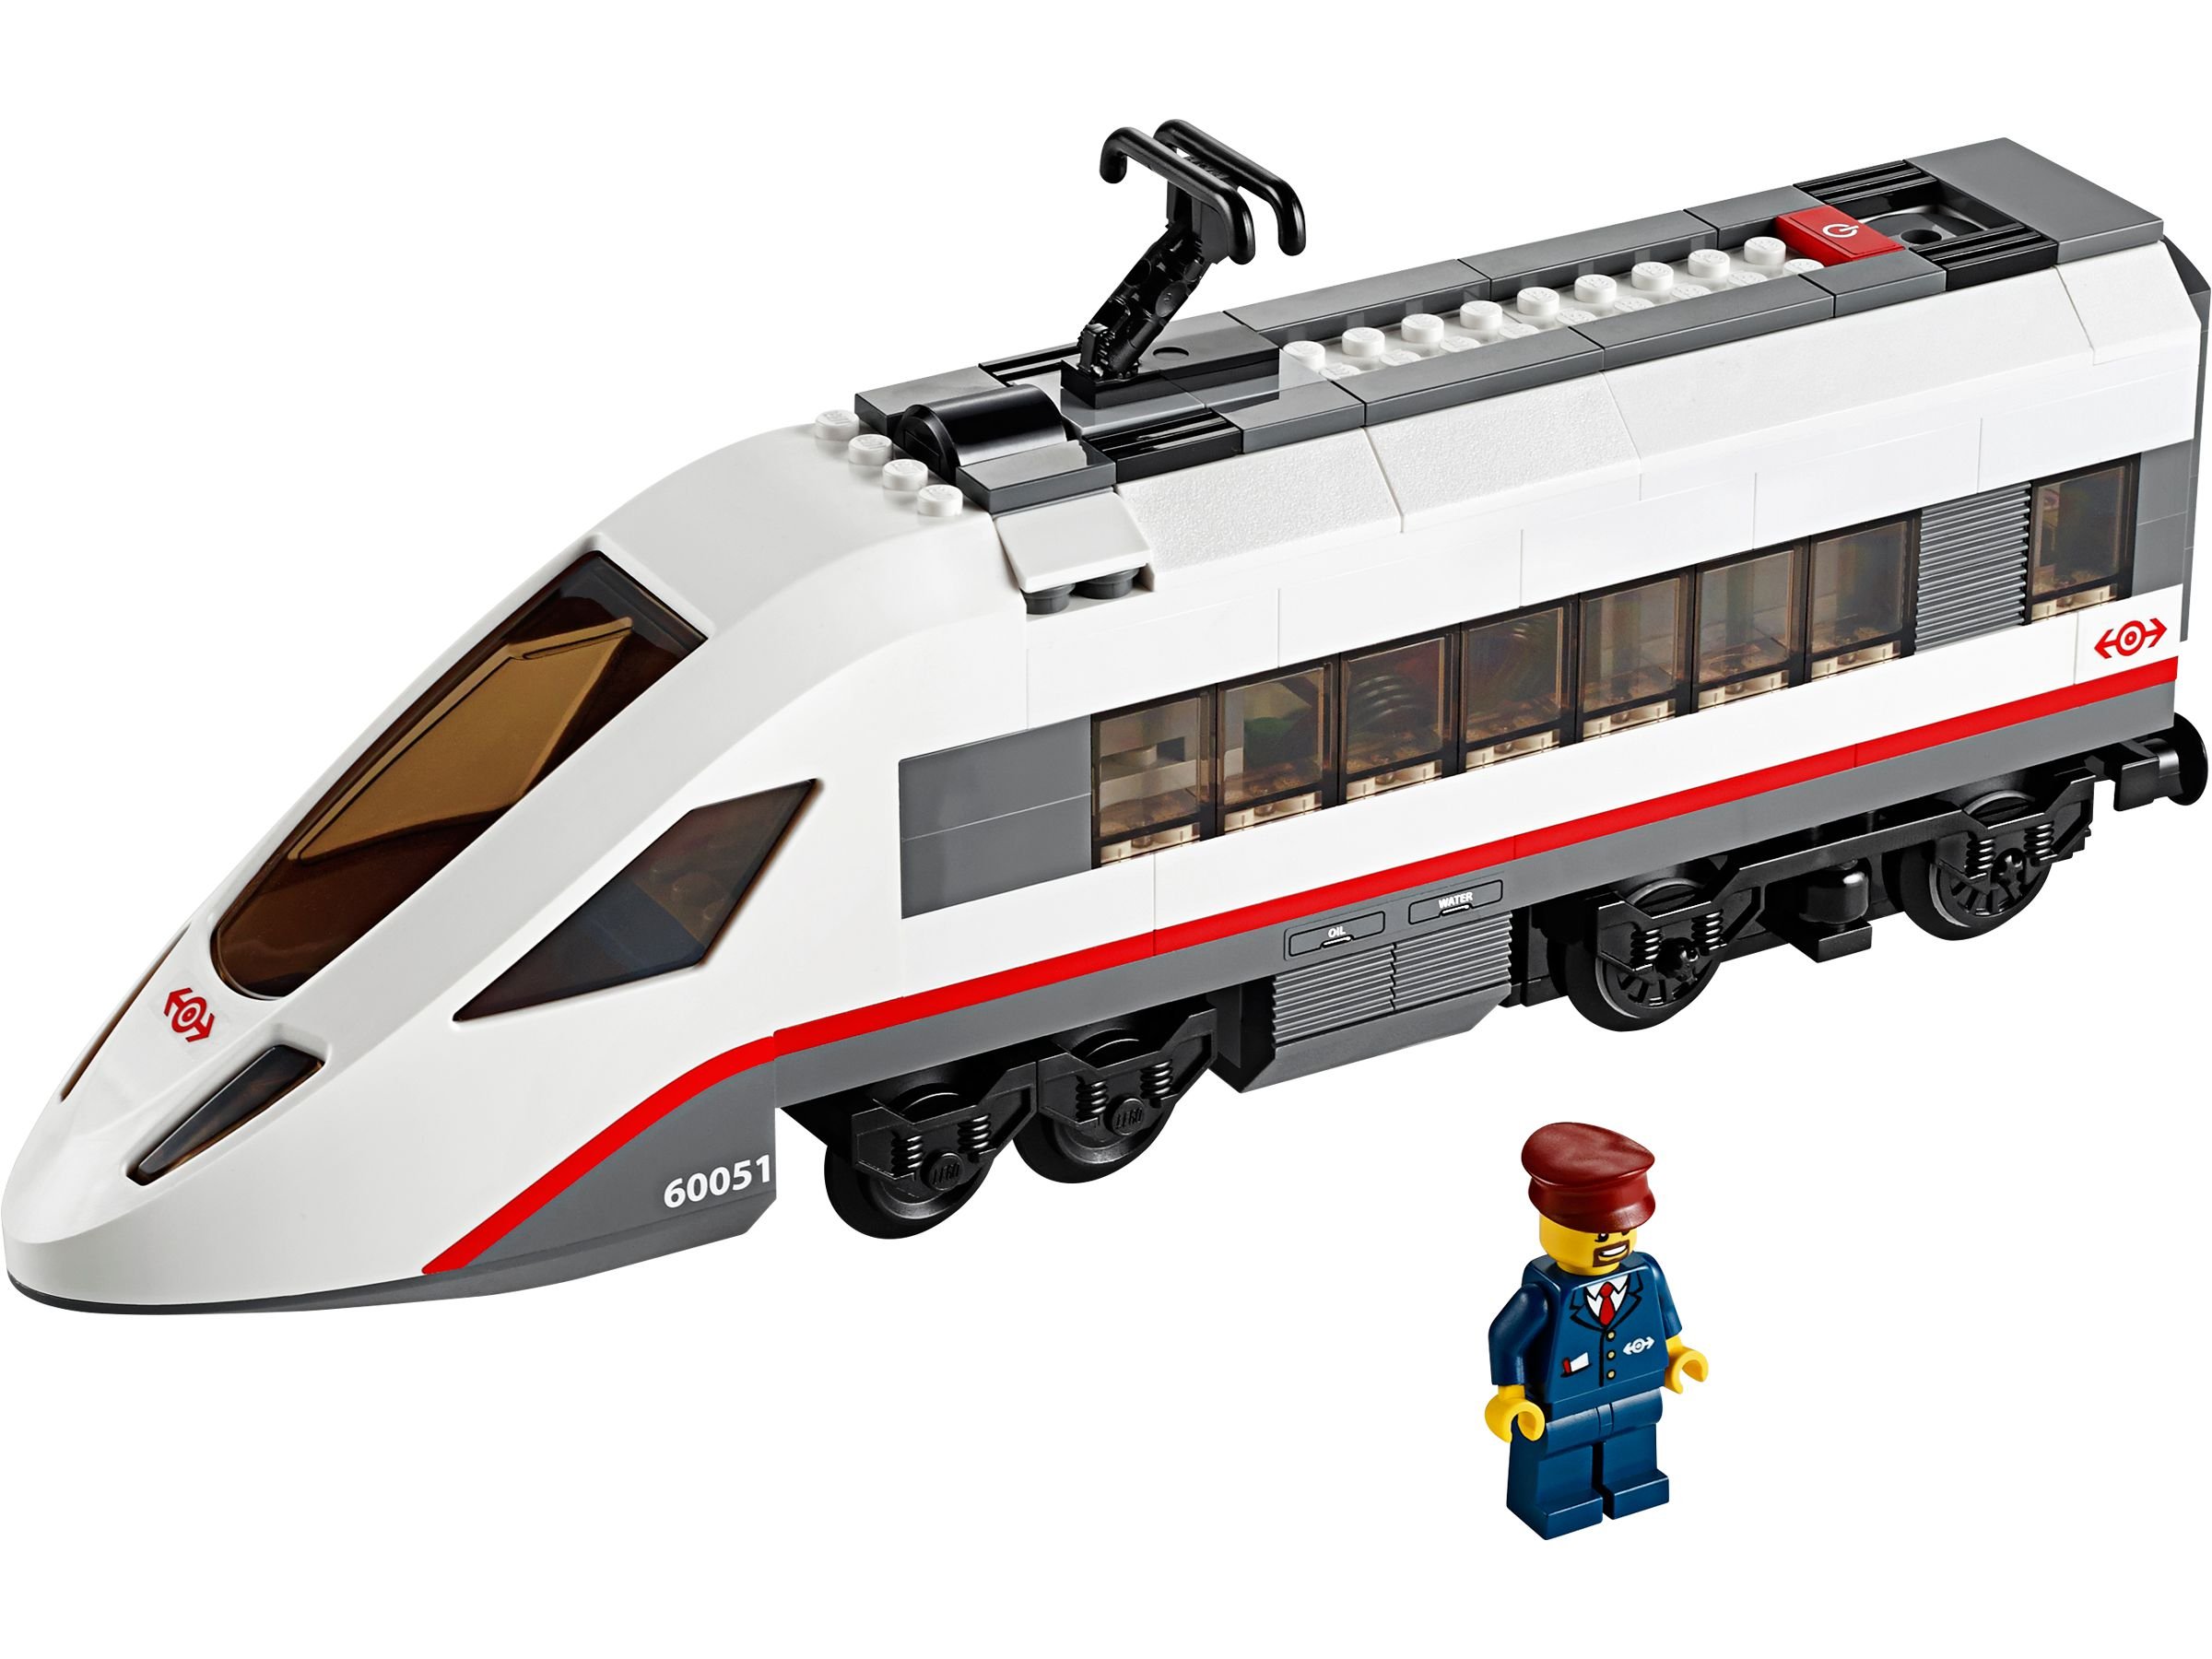 LEGO City 60051 Hochgeschwindigkeitszug LEGO_60051_alt2.jpg